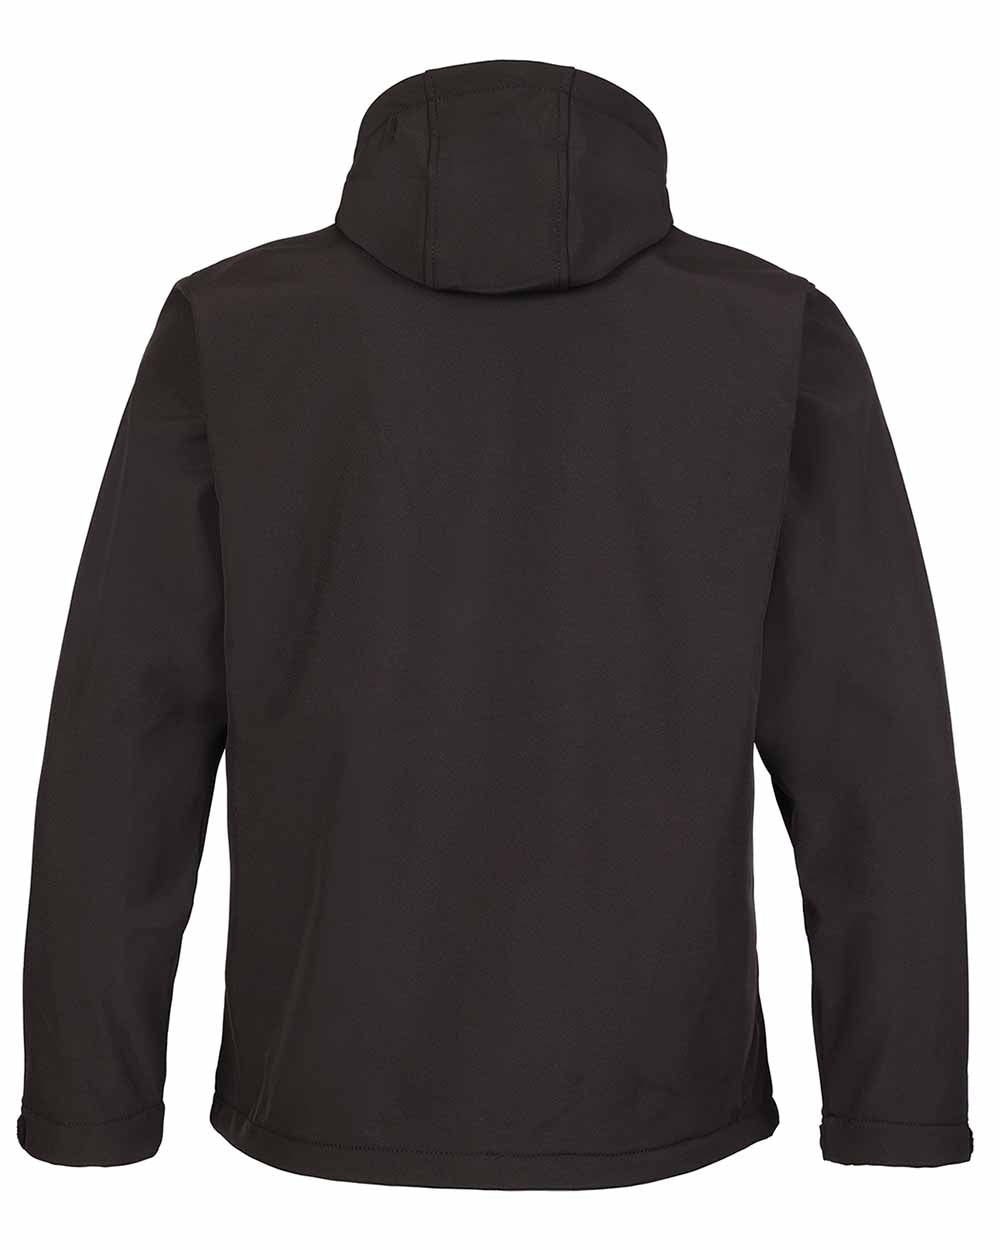 Black Coloured Fort Holkham Hooded Softshell Jacket On A White Background 